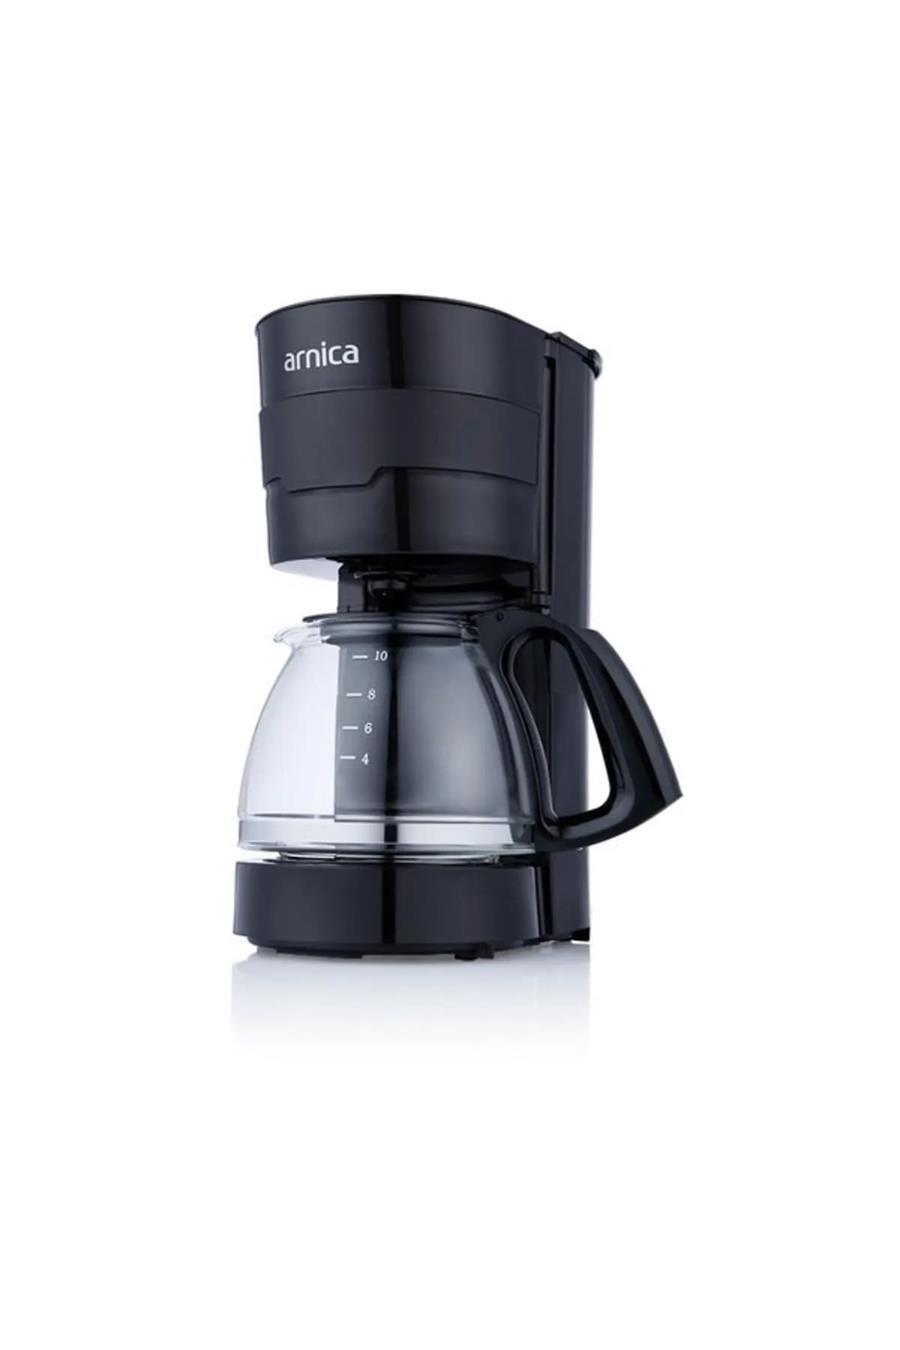 ARNICA IH32130 Aroma Filtre Kahve Makinesi Siyah